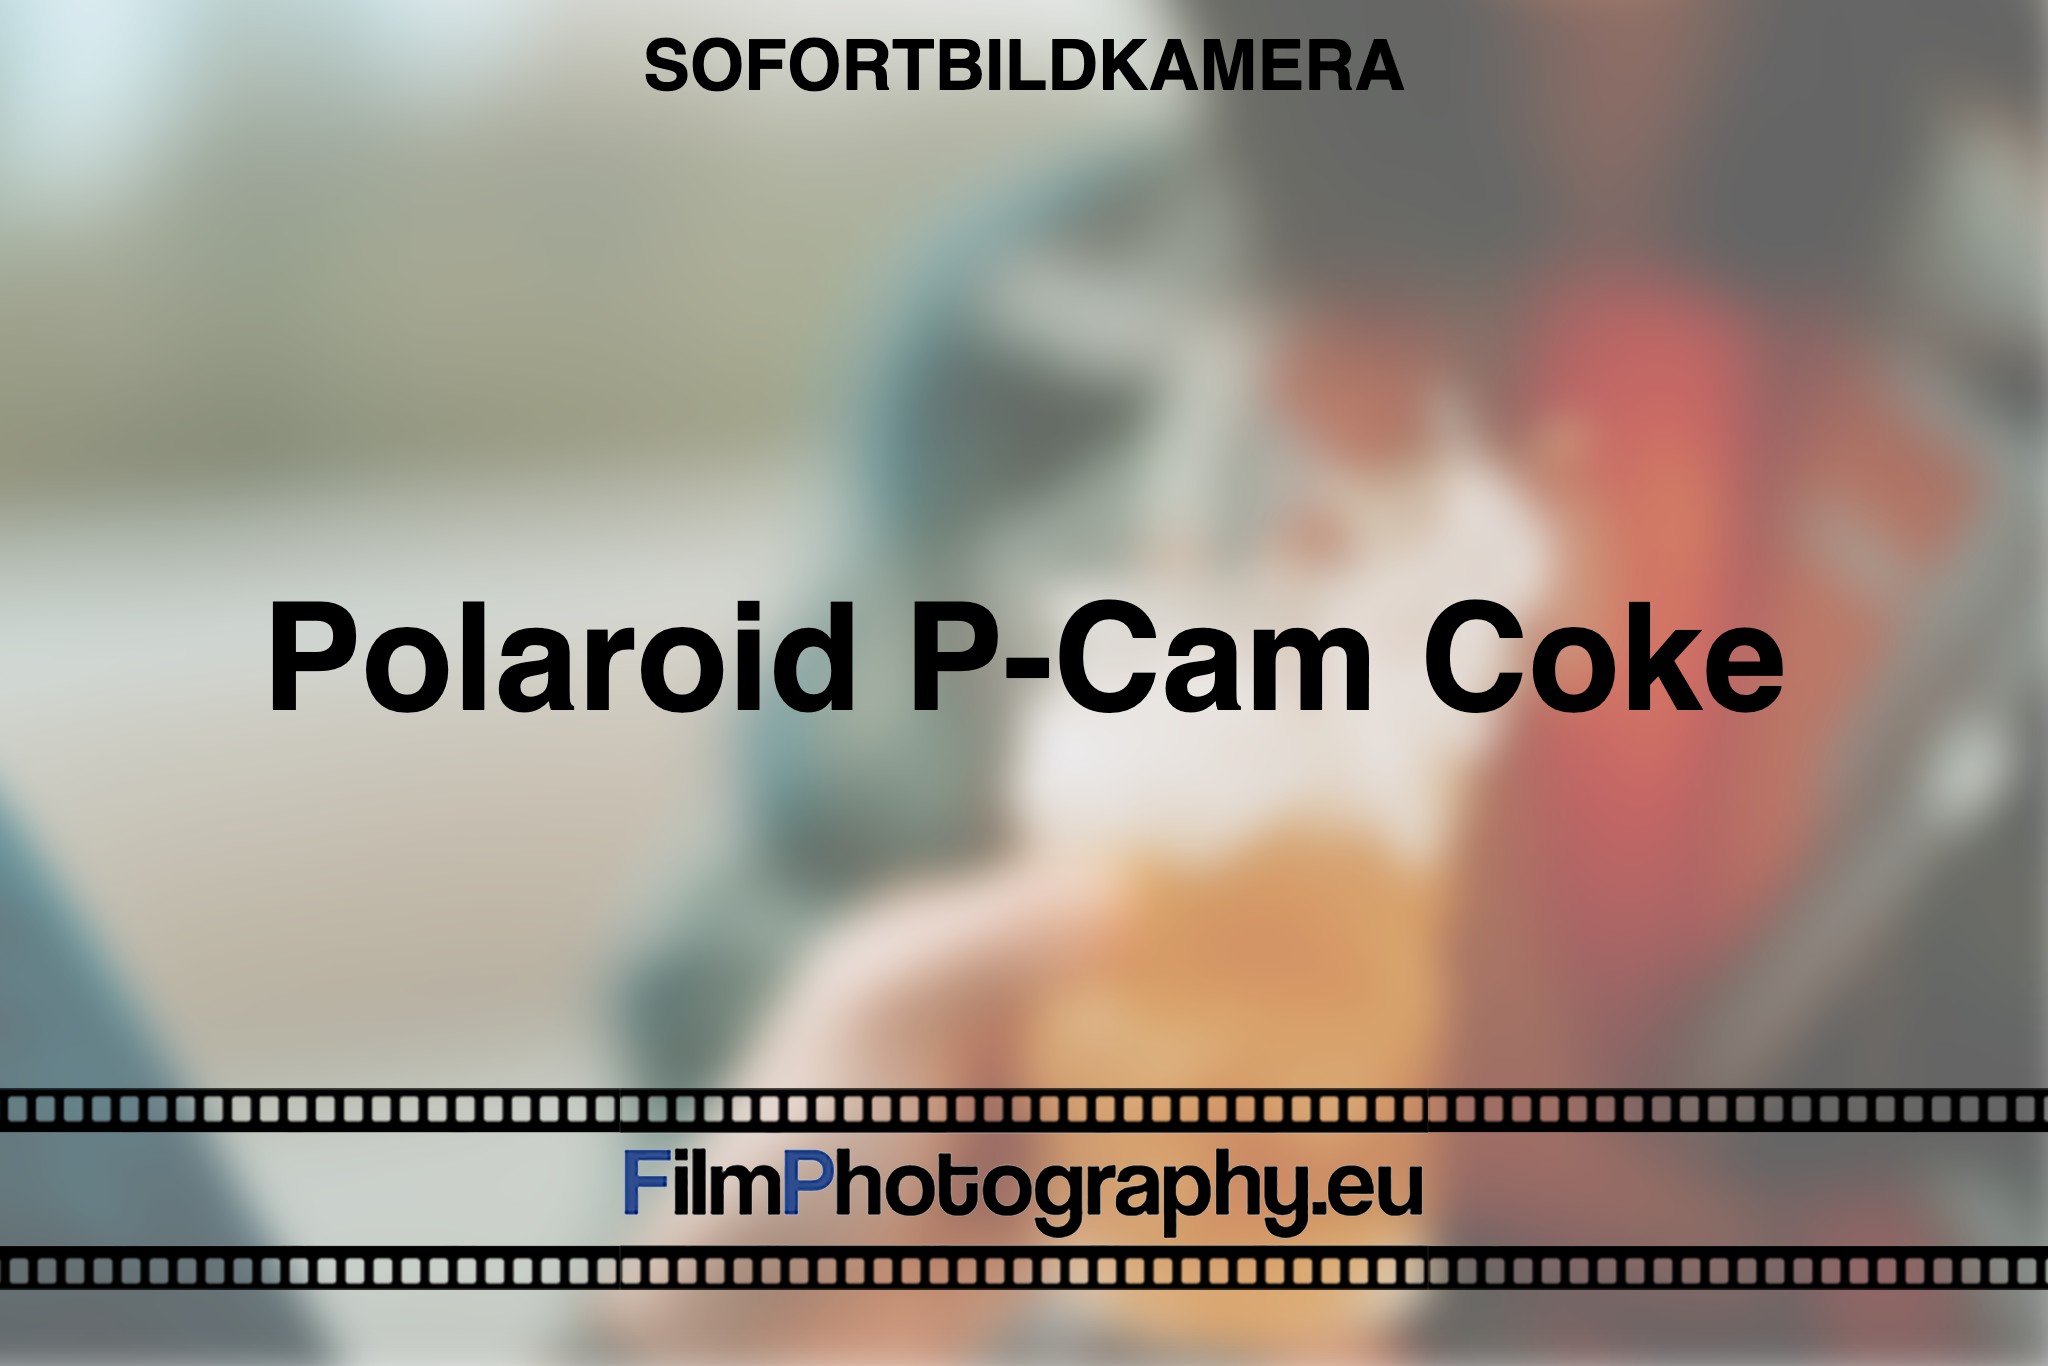 polaroid-p-cam-coke-sofortbildkamera-fp-bnv